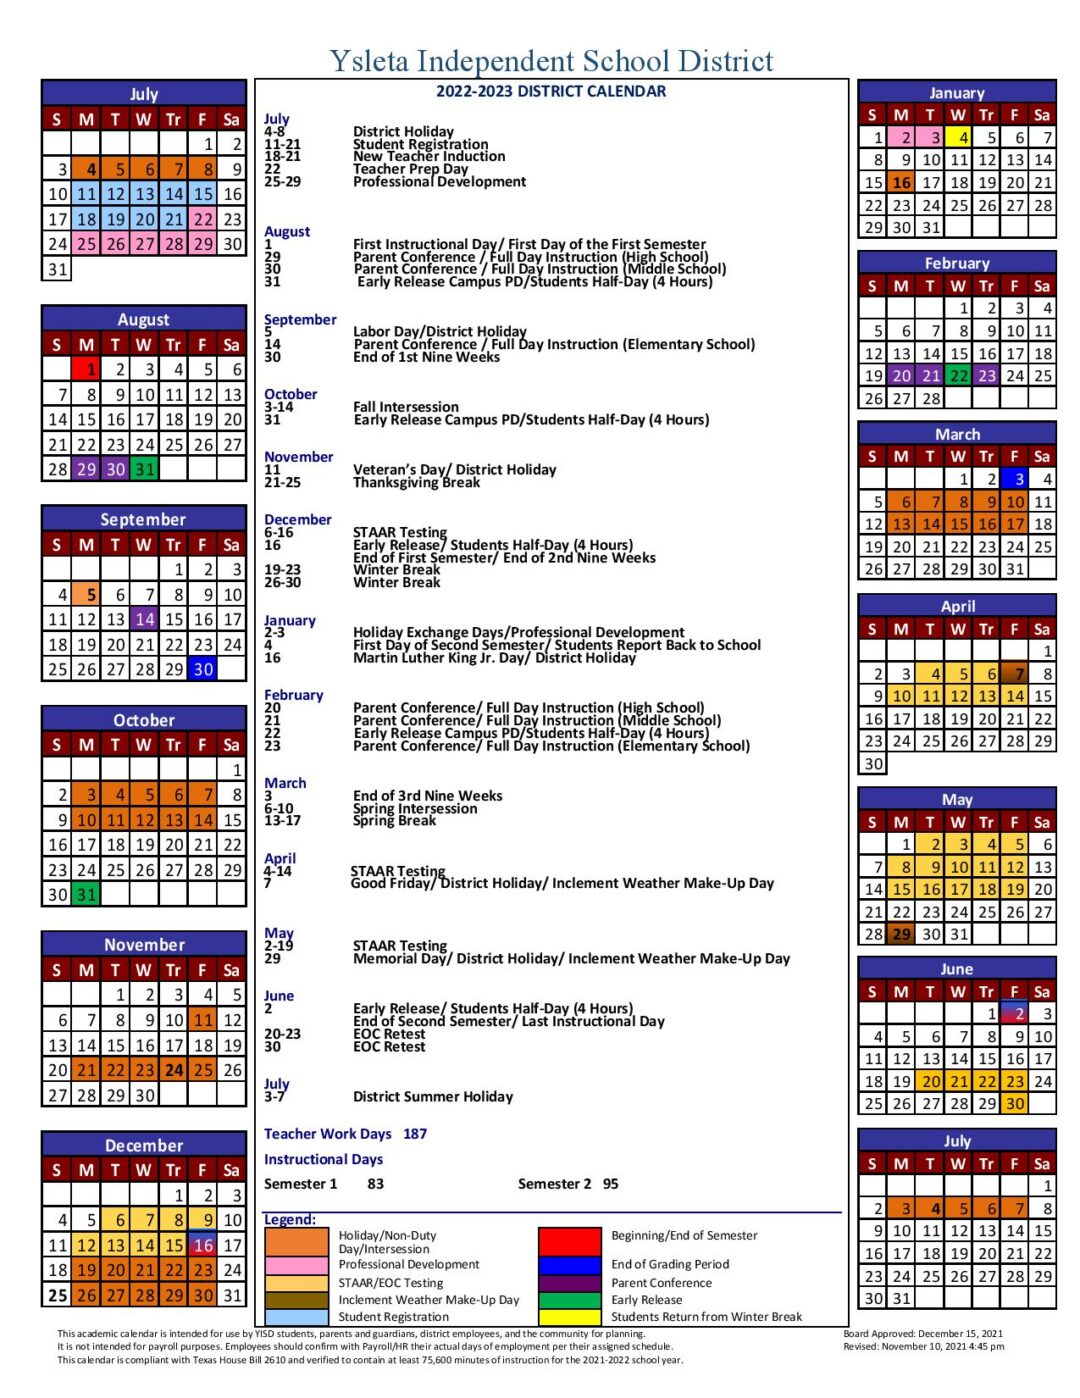 Ysleta Independent School District Calendar 20222023